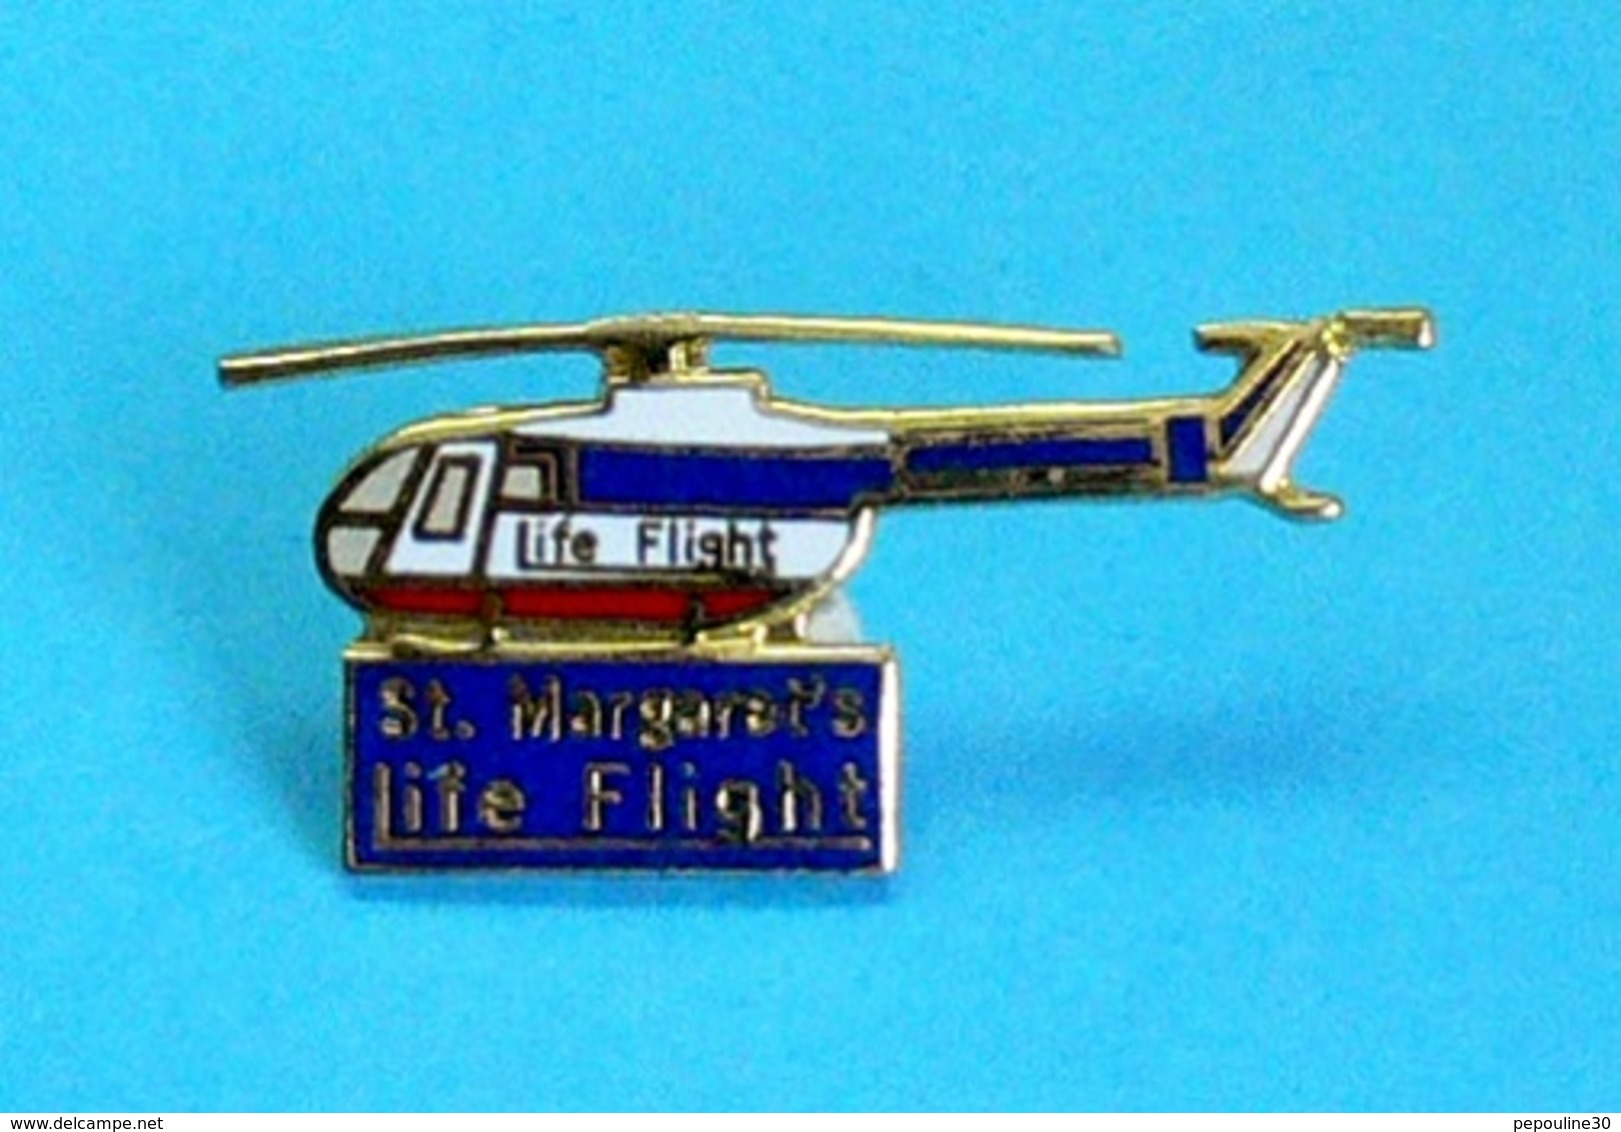 1 PIN'S //   ** St MARGARET's / LIFE FLIGHT / HÉLICOPTÈRE MBB BO-105C ** . (20/20) - Vliegtuigen